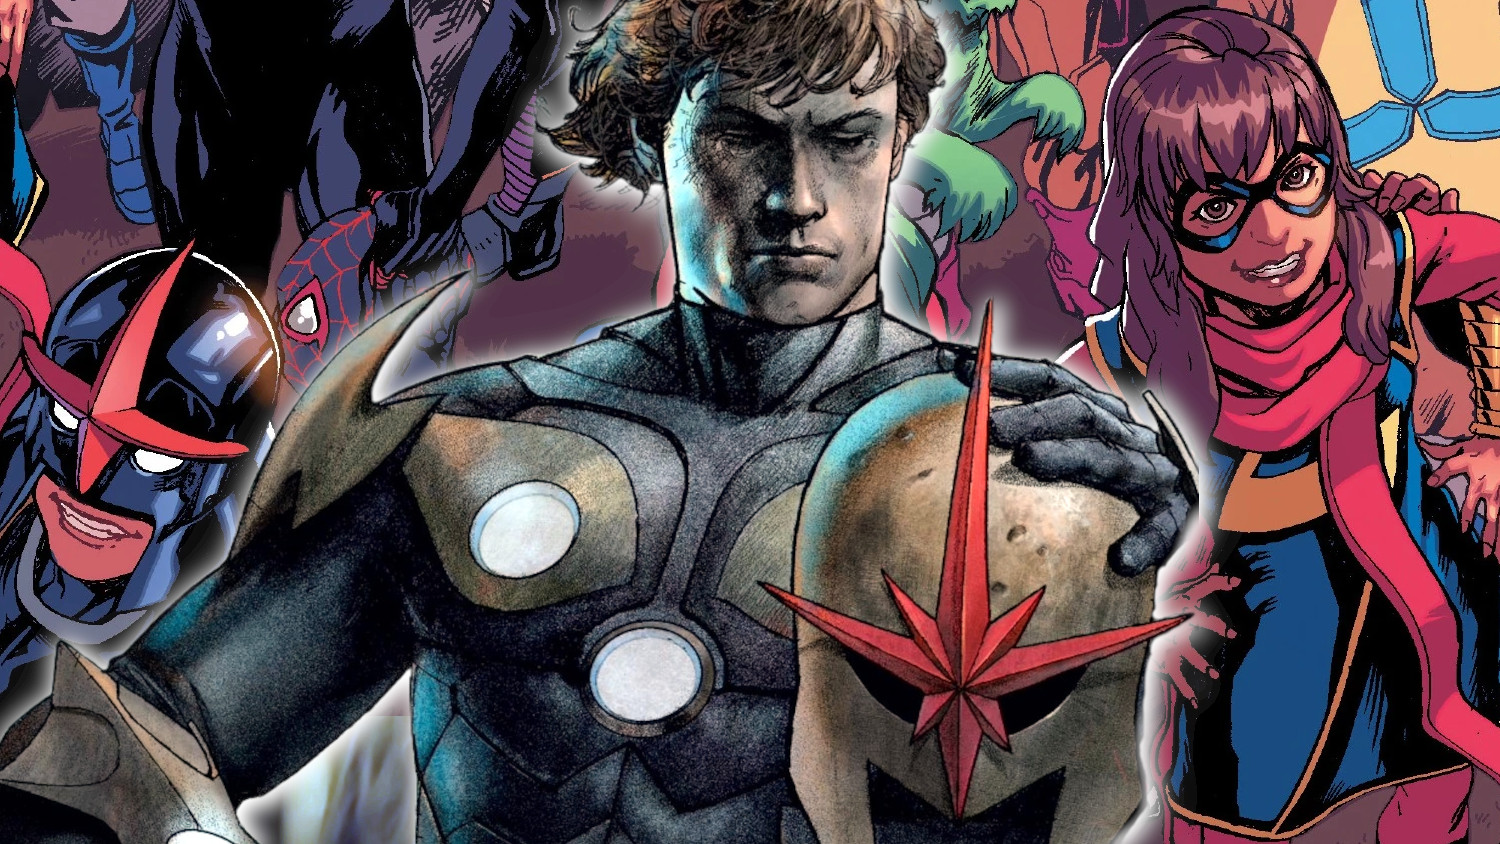 Kevin Feige Continues Destroying Marvel With Woke Nova on Disney+